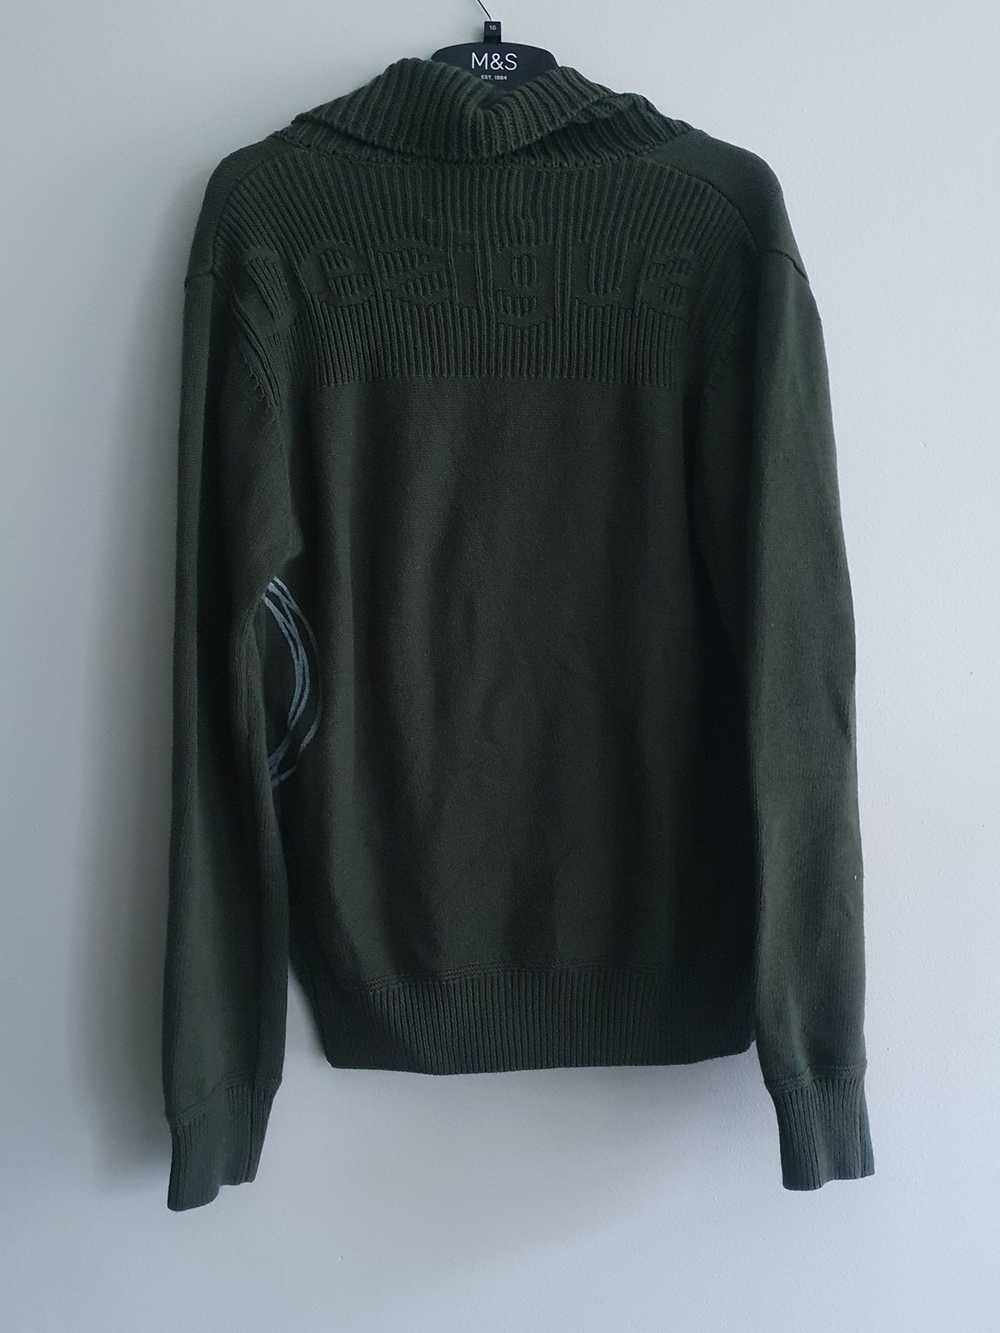 Desigual Sweater Mens Size European M - image 6